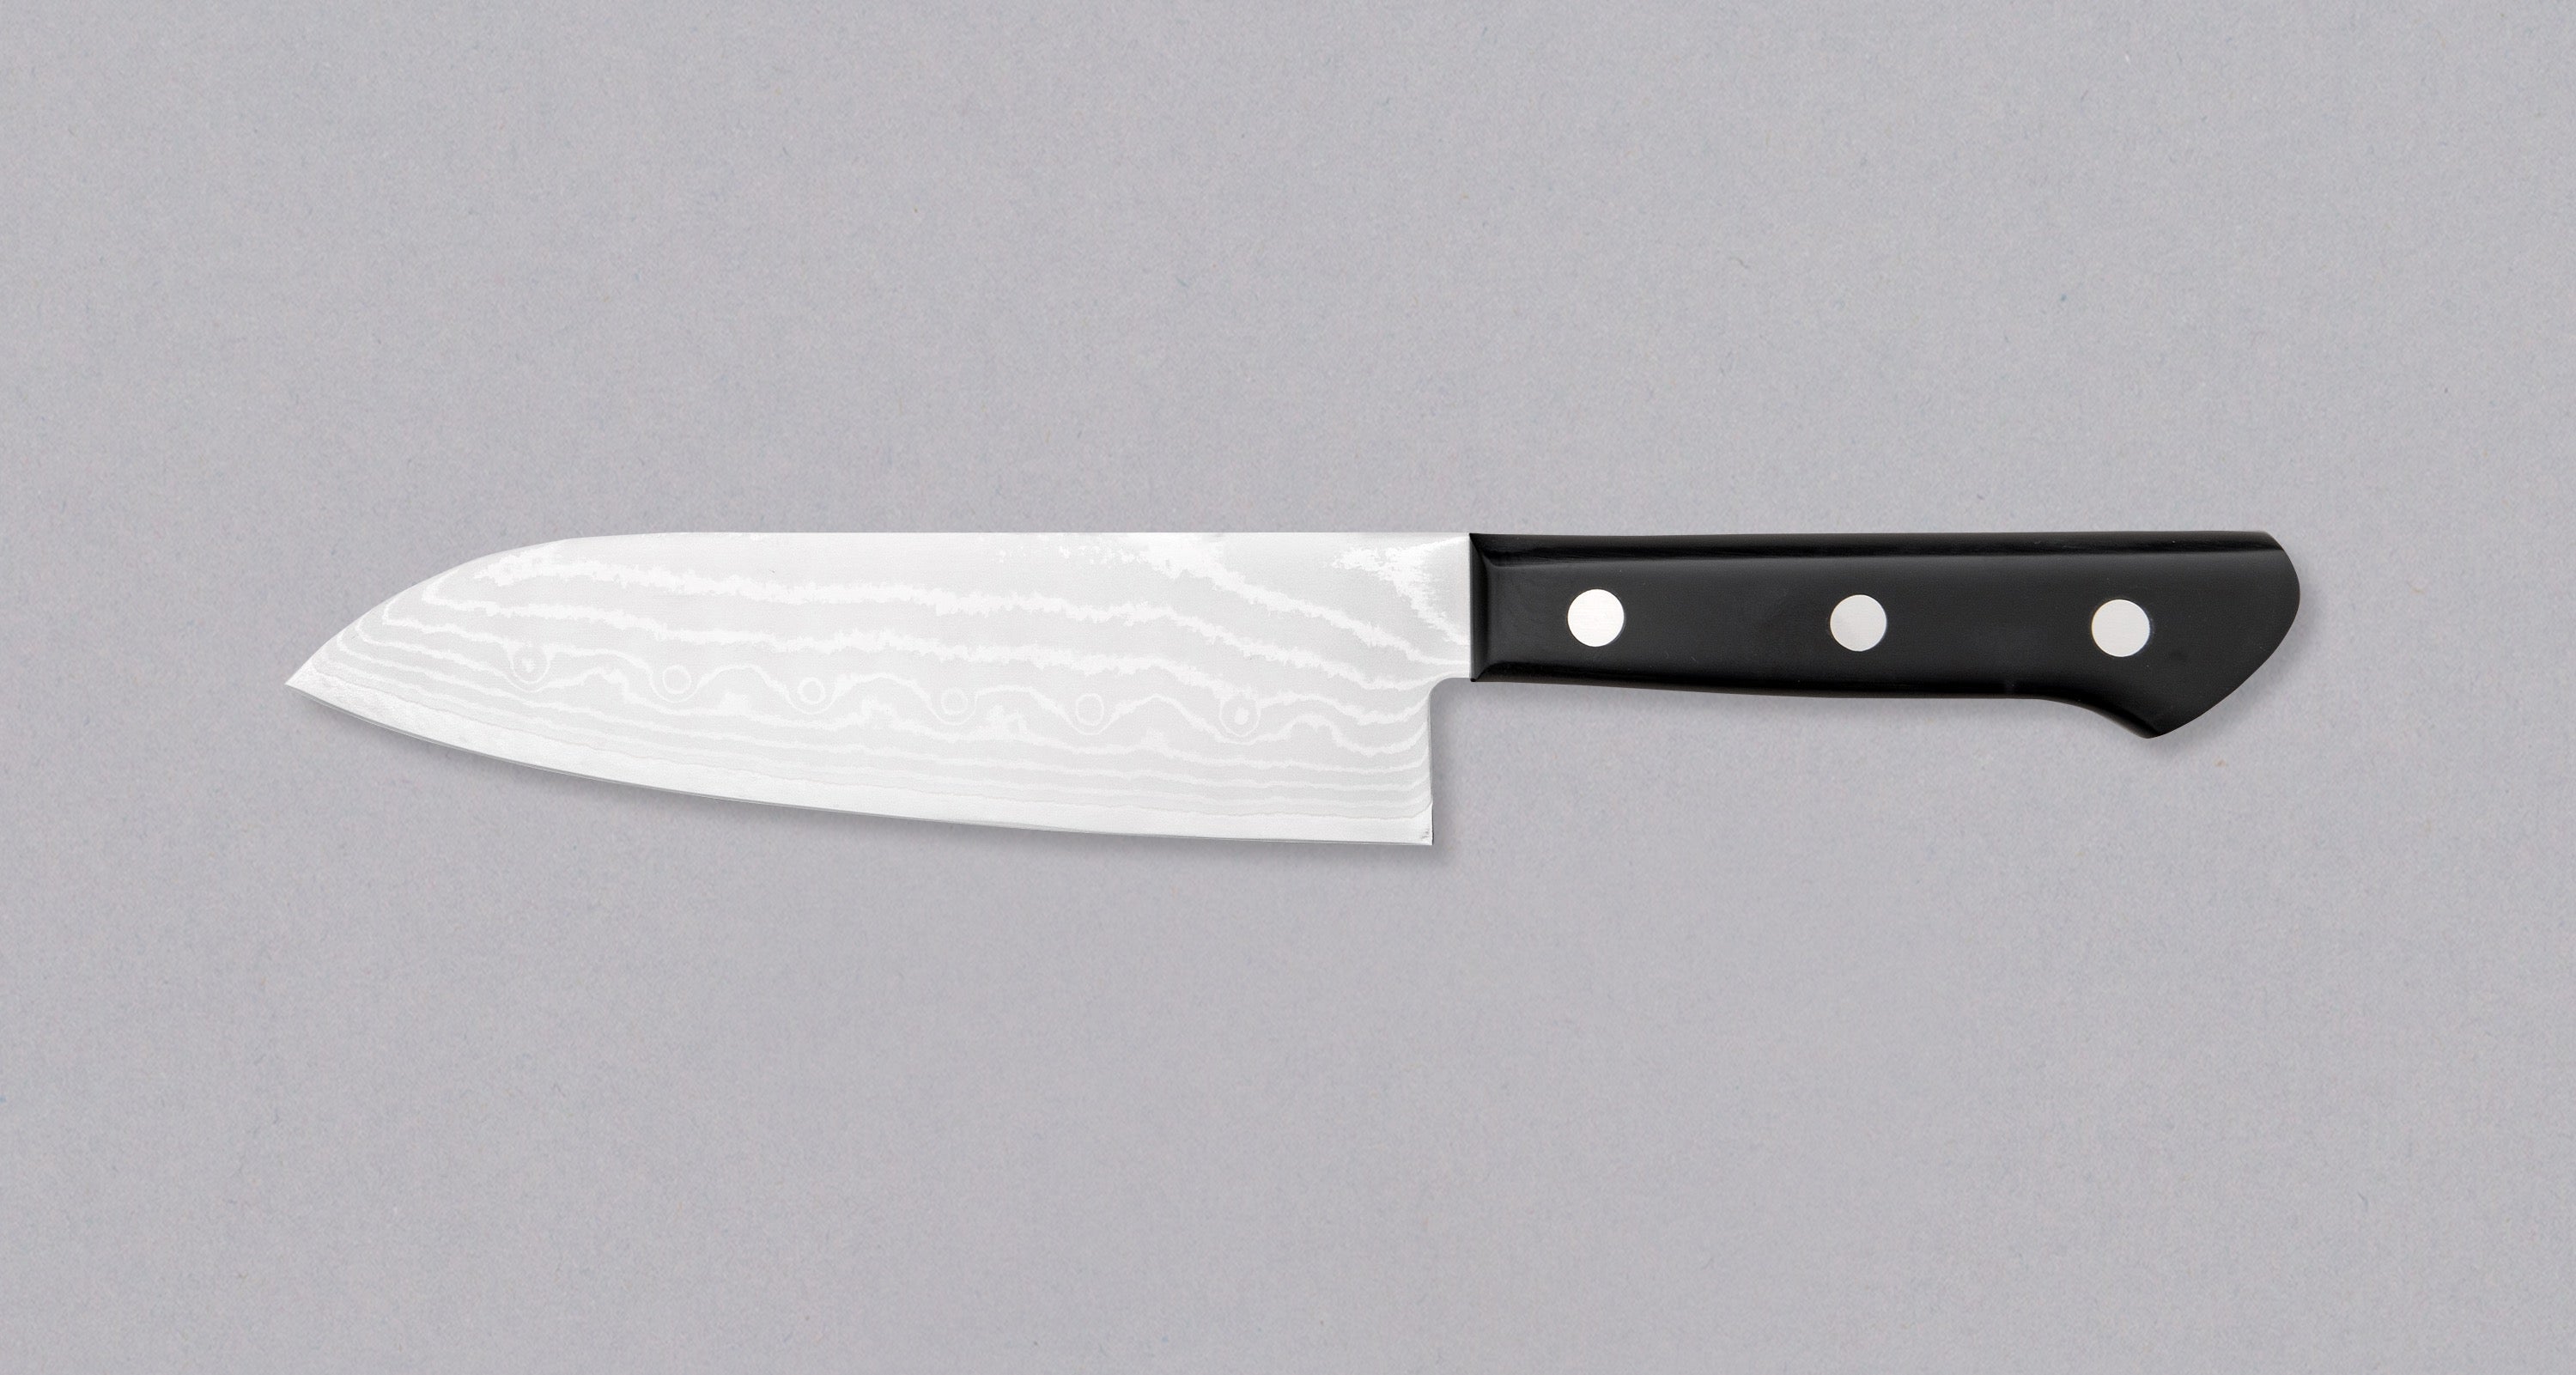 Ceramic Paring Knives - Kyocera Advanced Ceramics - Knife Center